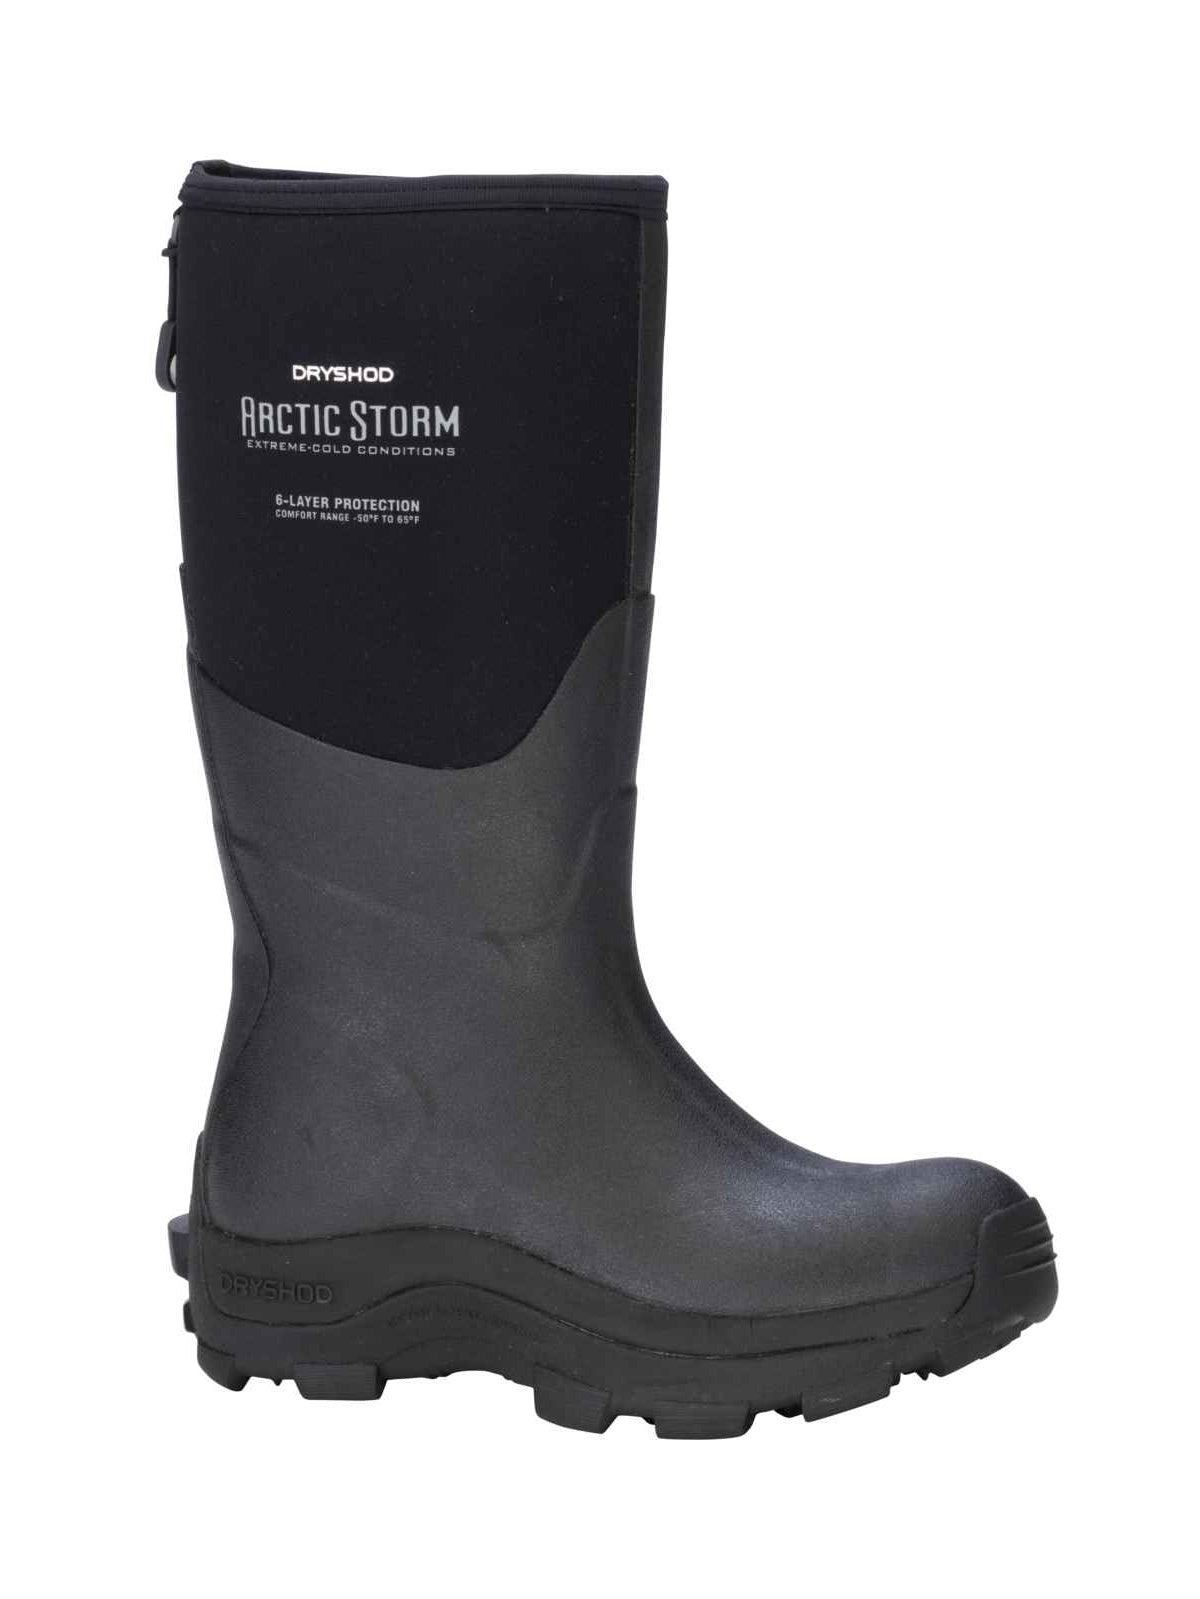 Dryshod Arctic Storm Woman's High Cut Boots